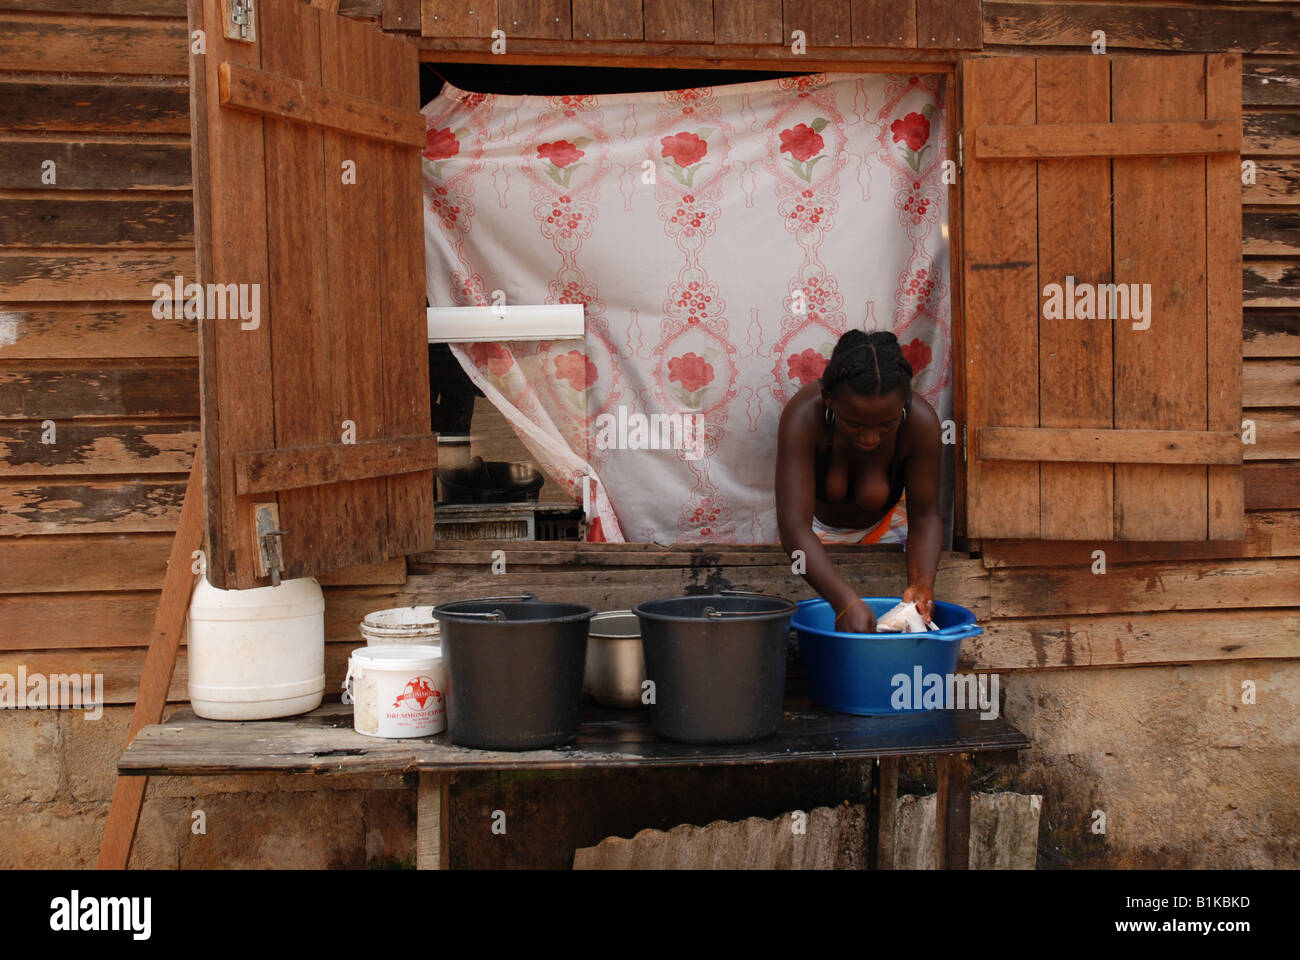 black woman cleaning a piranha fish Apatou Haut Maroni French Guyana South America Stock Photo